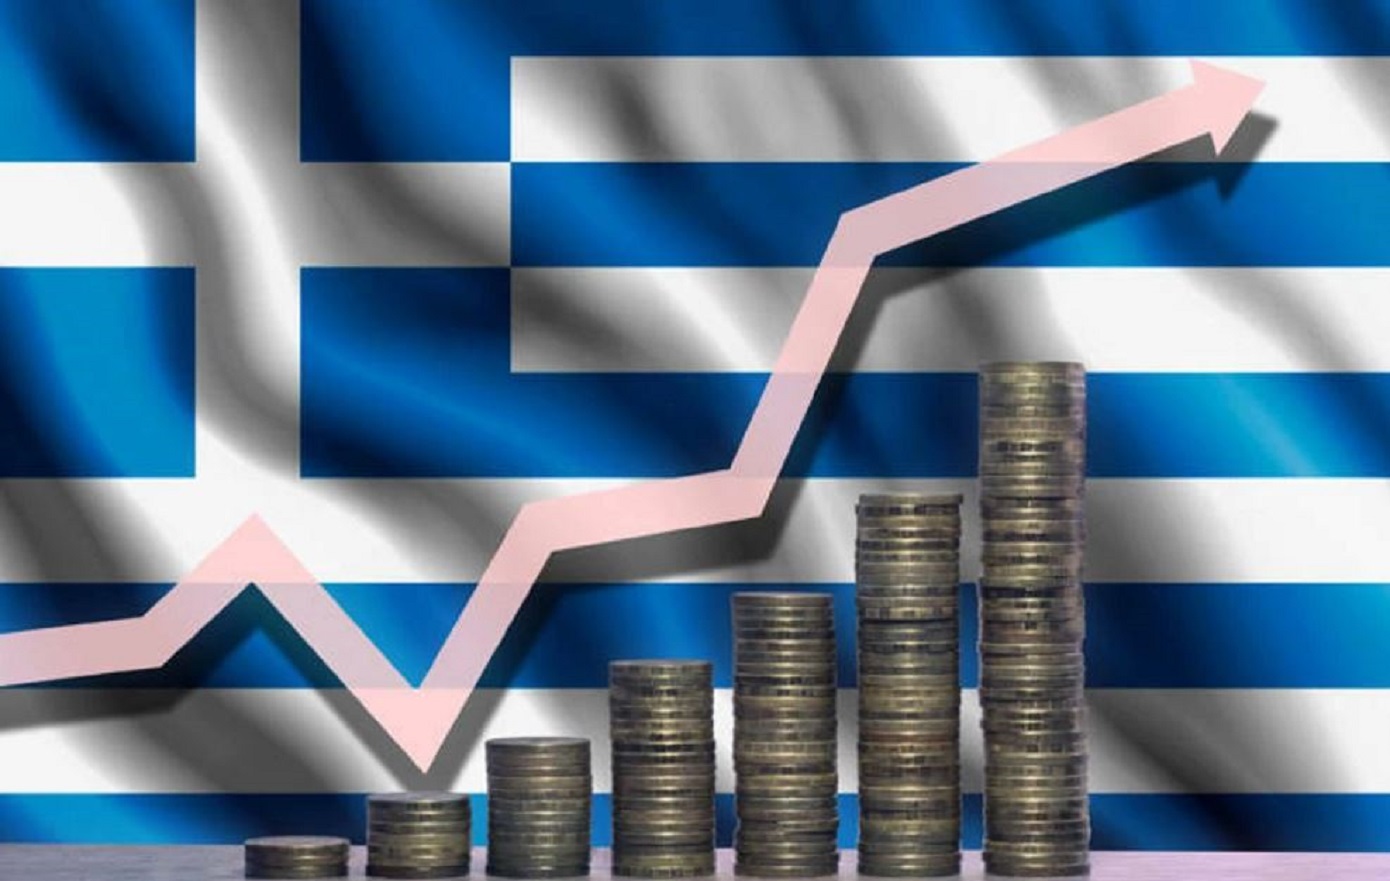 Focus: Κράτη που μπαίνουν στην ίδια πρόταση με την τσαπατσουλιά, όπως η Ελλάδα, ξεπέρασαν τη γερμανική οικονομία